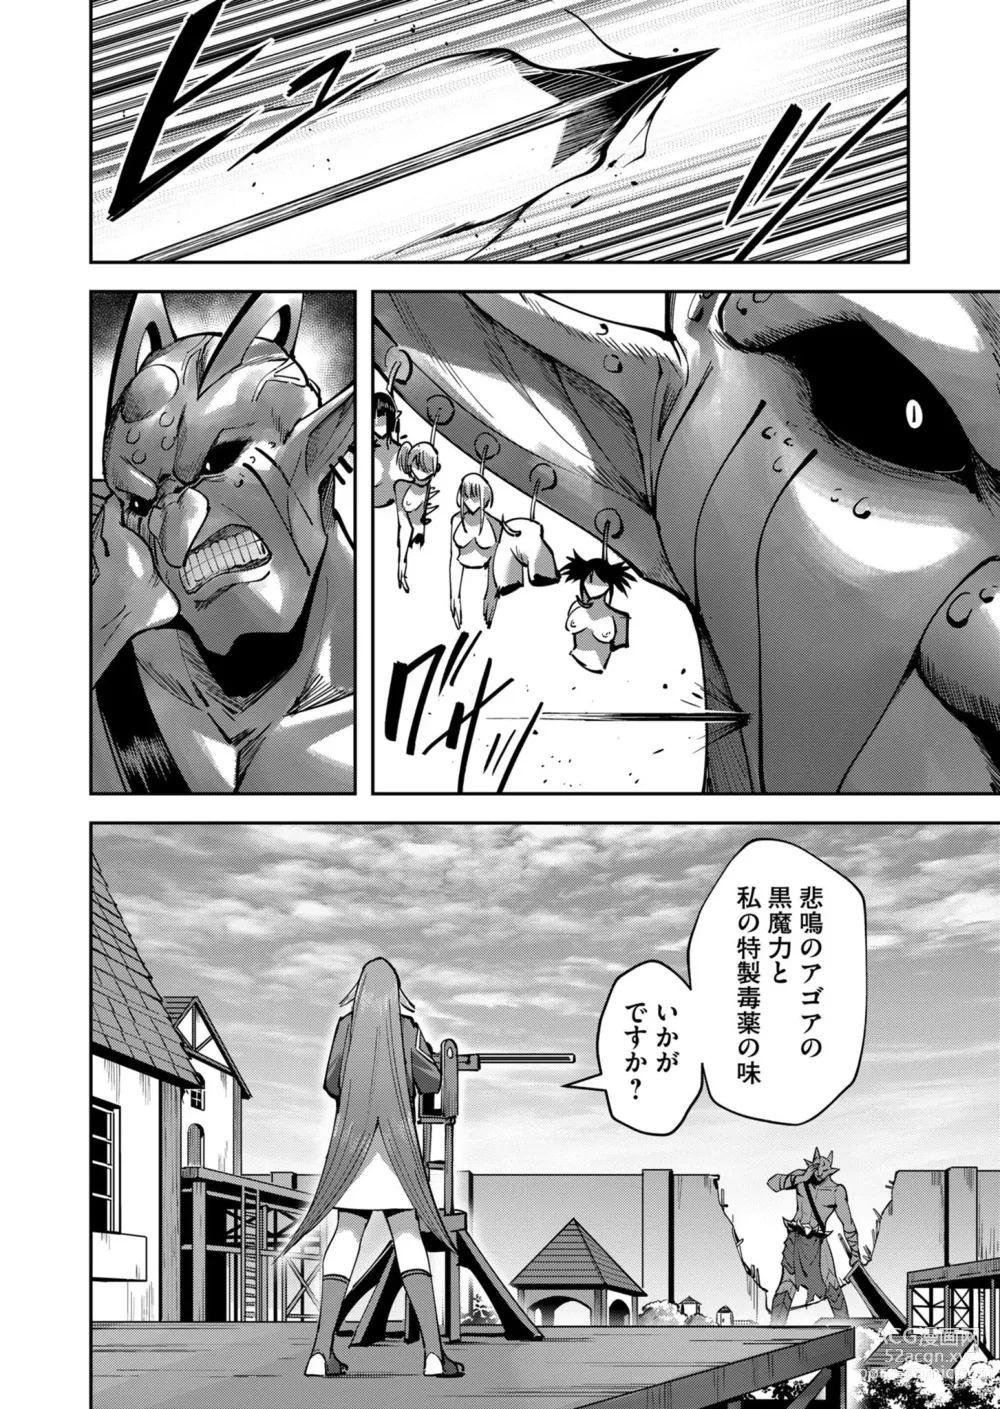 Page 32 of manga Kichiku Eiyuu Vol.05